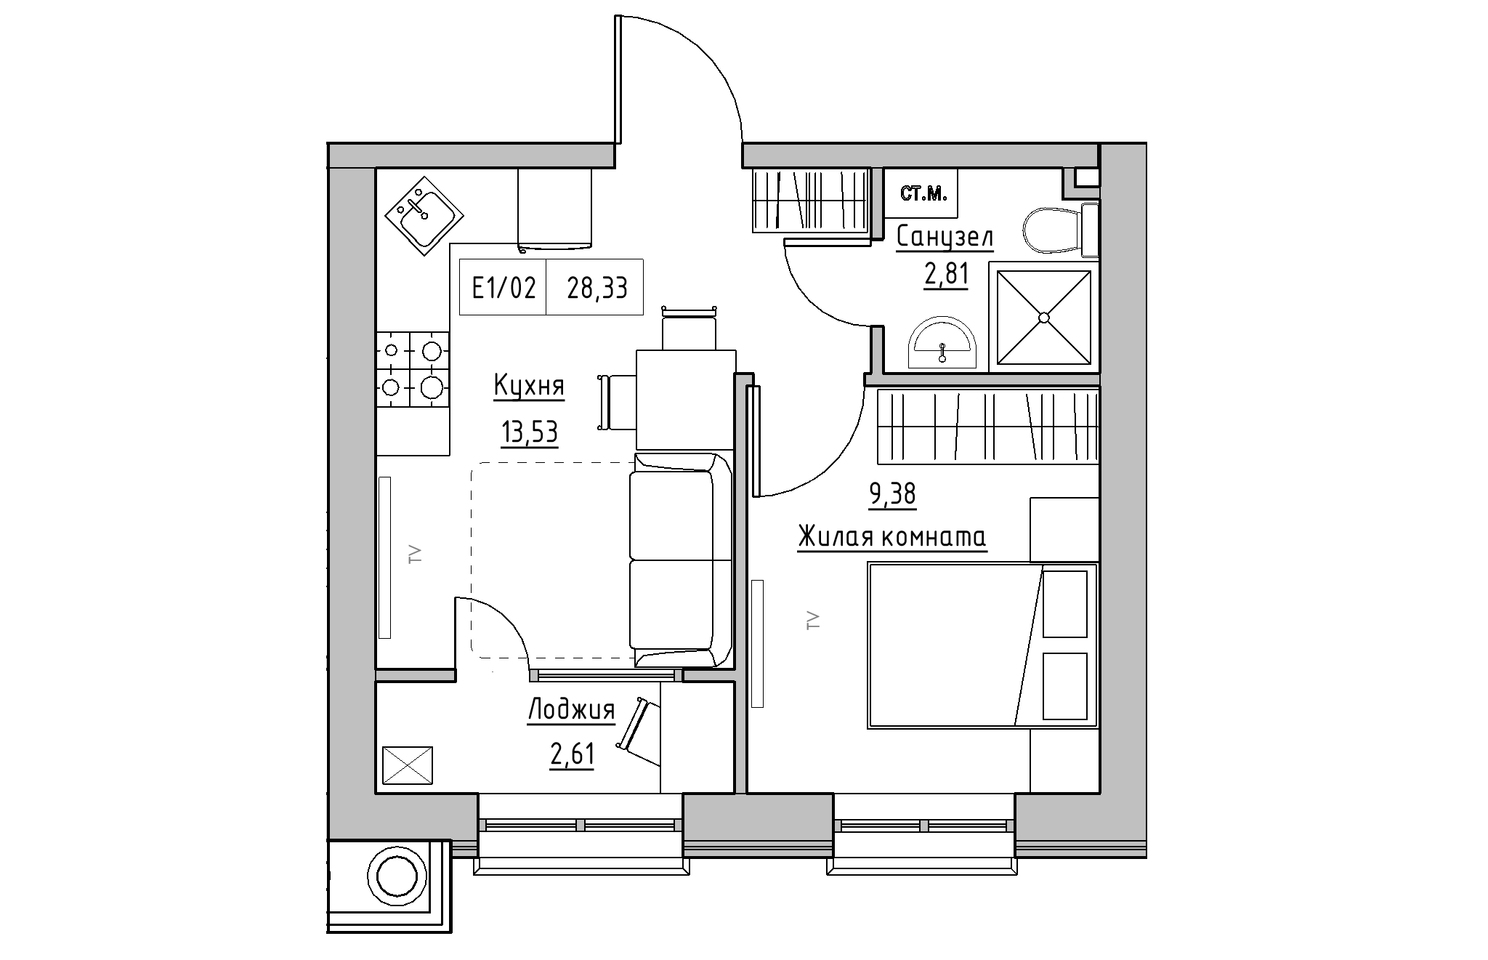 Planning 1-rm flats area 28.33m2, KS-010-05/0001.